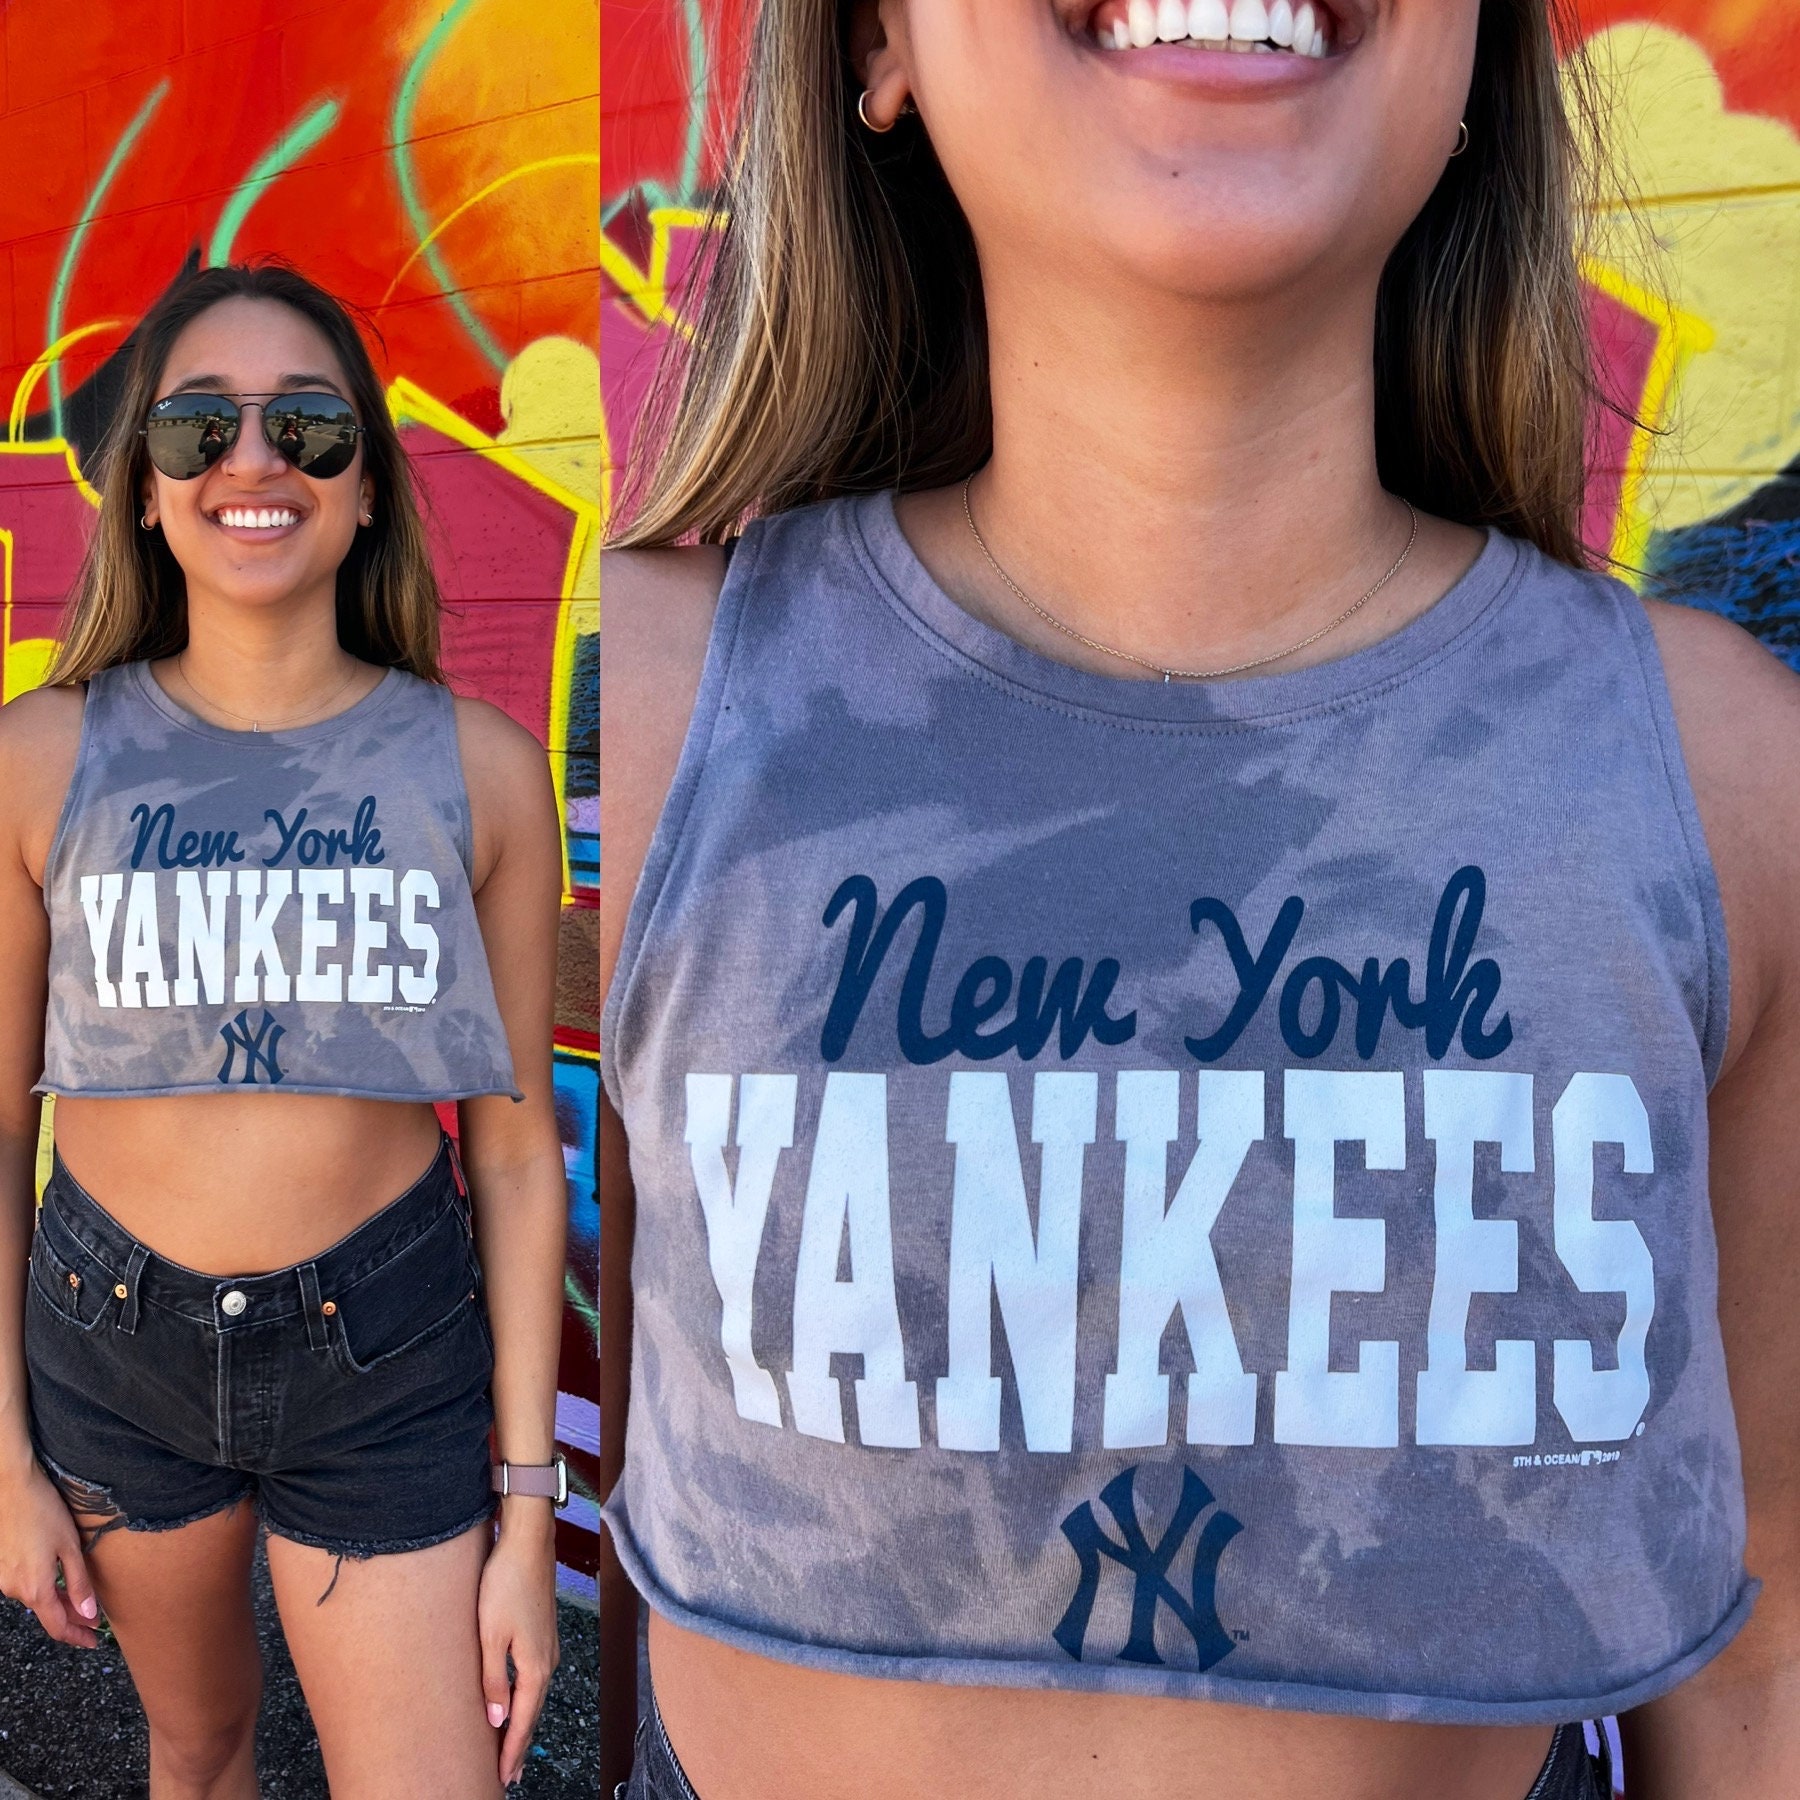 Nike Team Tech (MLB New York Yankees) Women's Racerback Tank Top